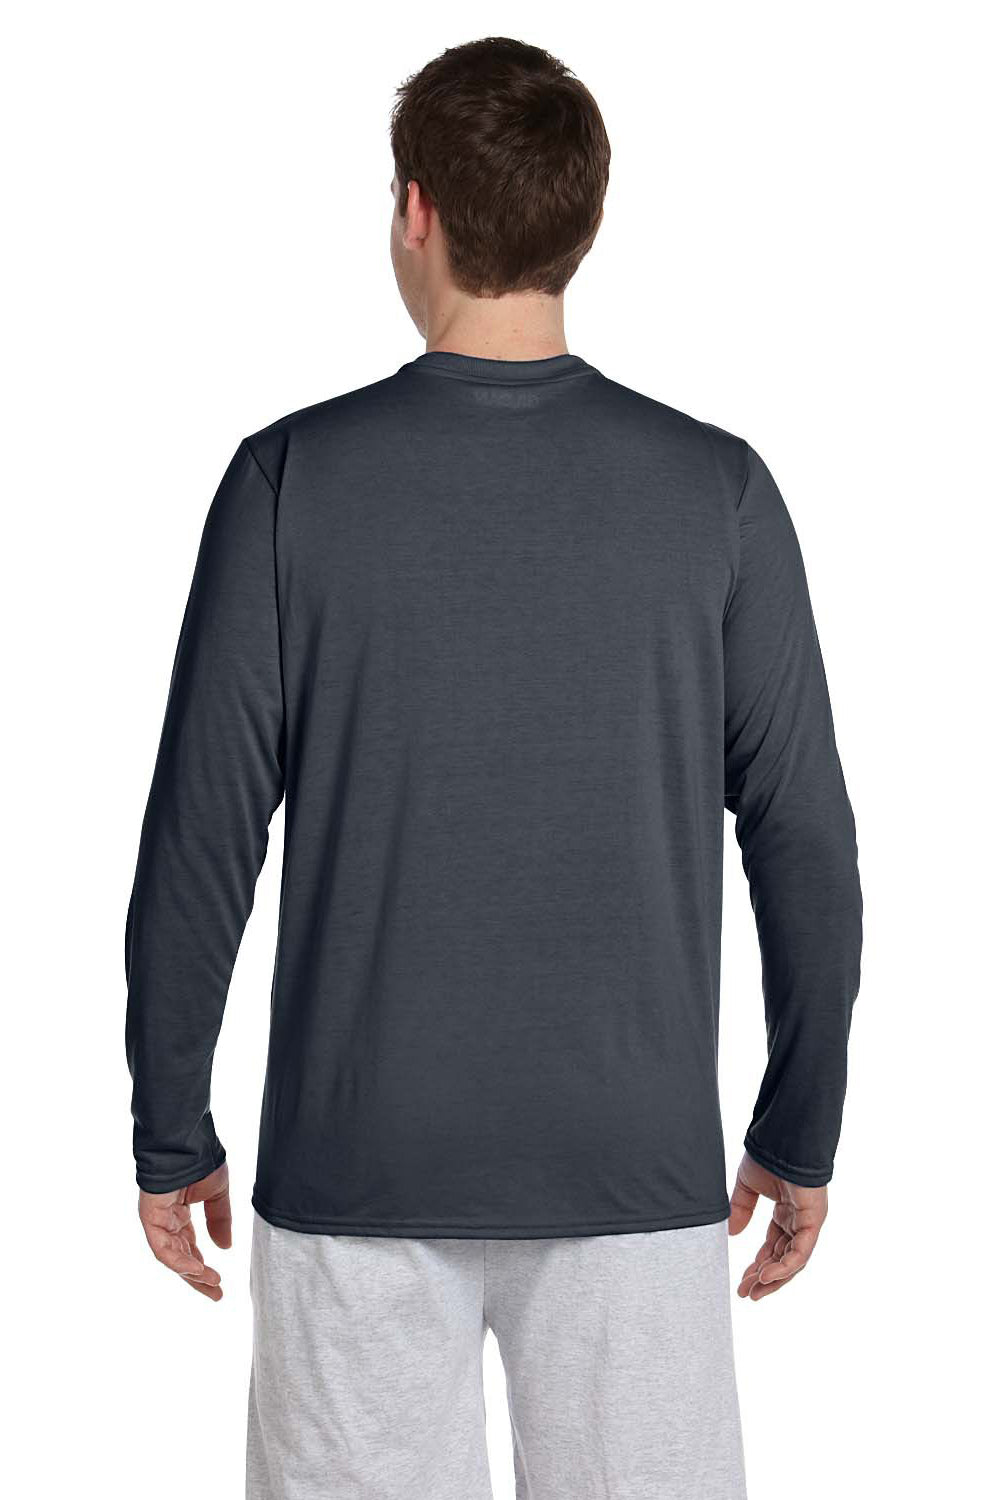 Gildan G424 Mens Performance Jersey Moisture Wicking Long Sleeve Crewneck T-Shirt Charcoal Grey Back